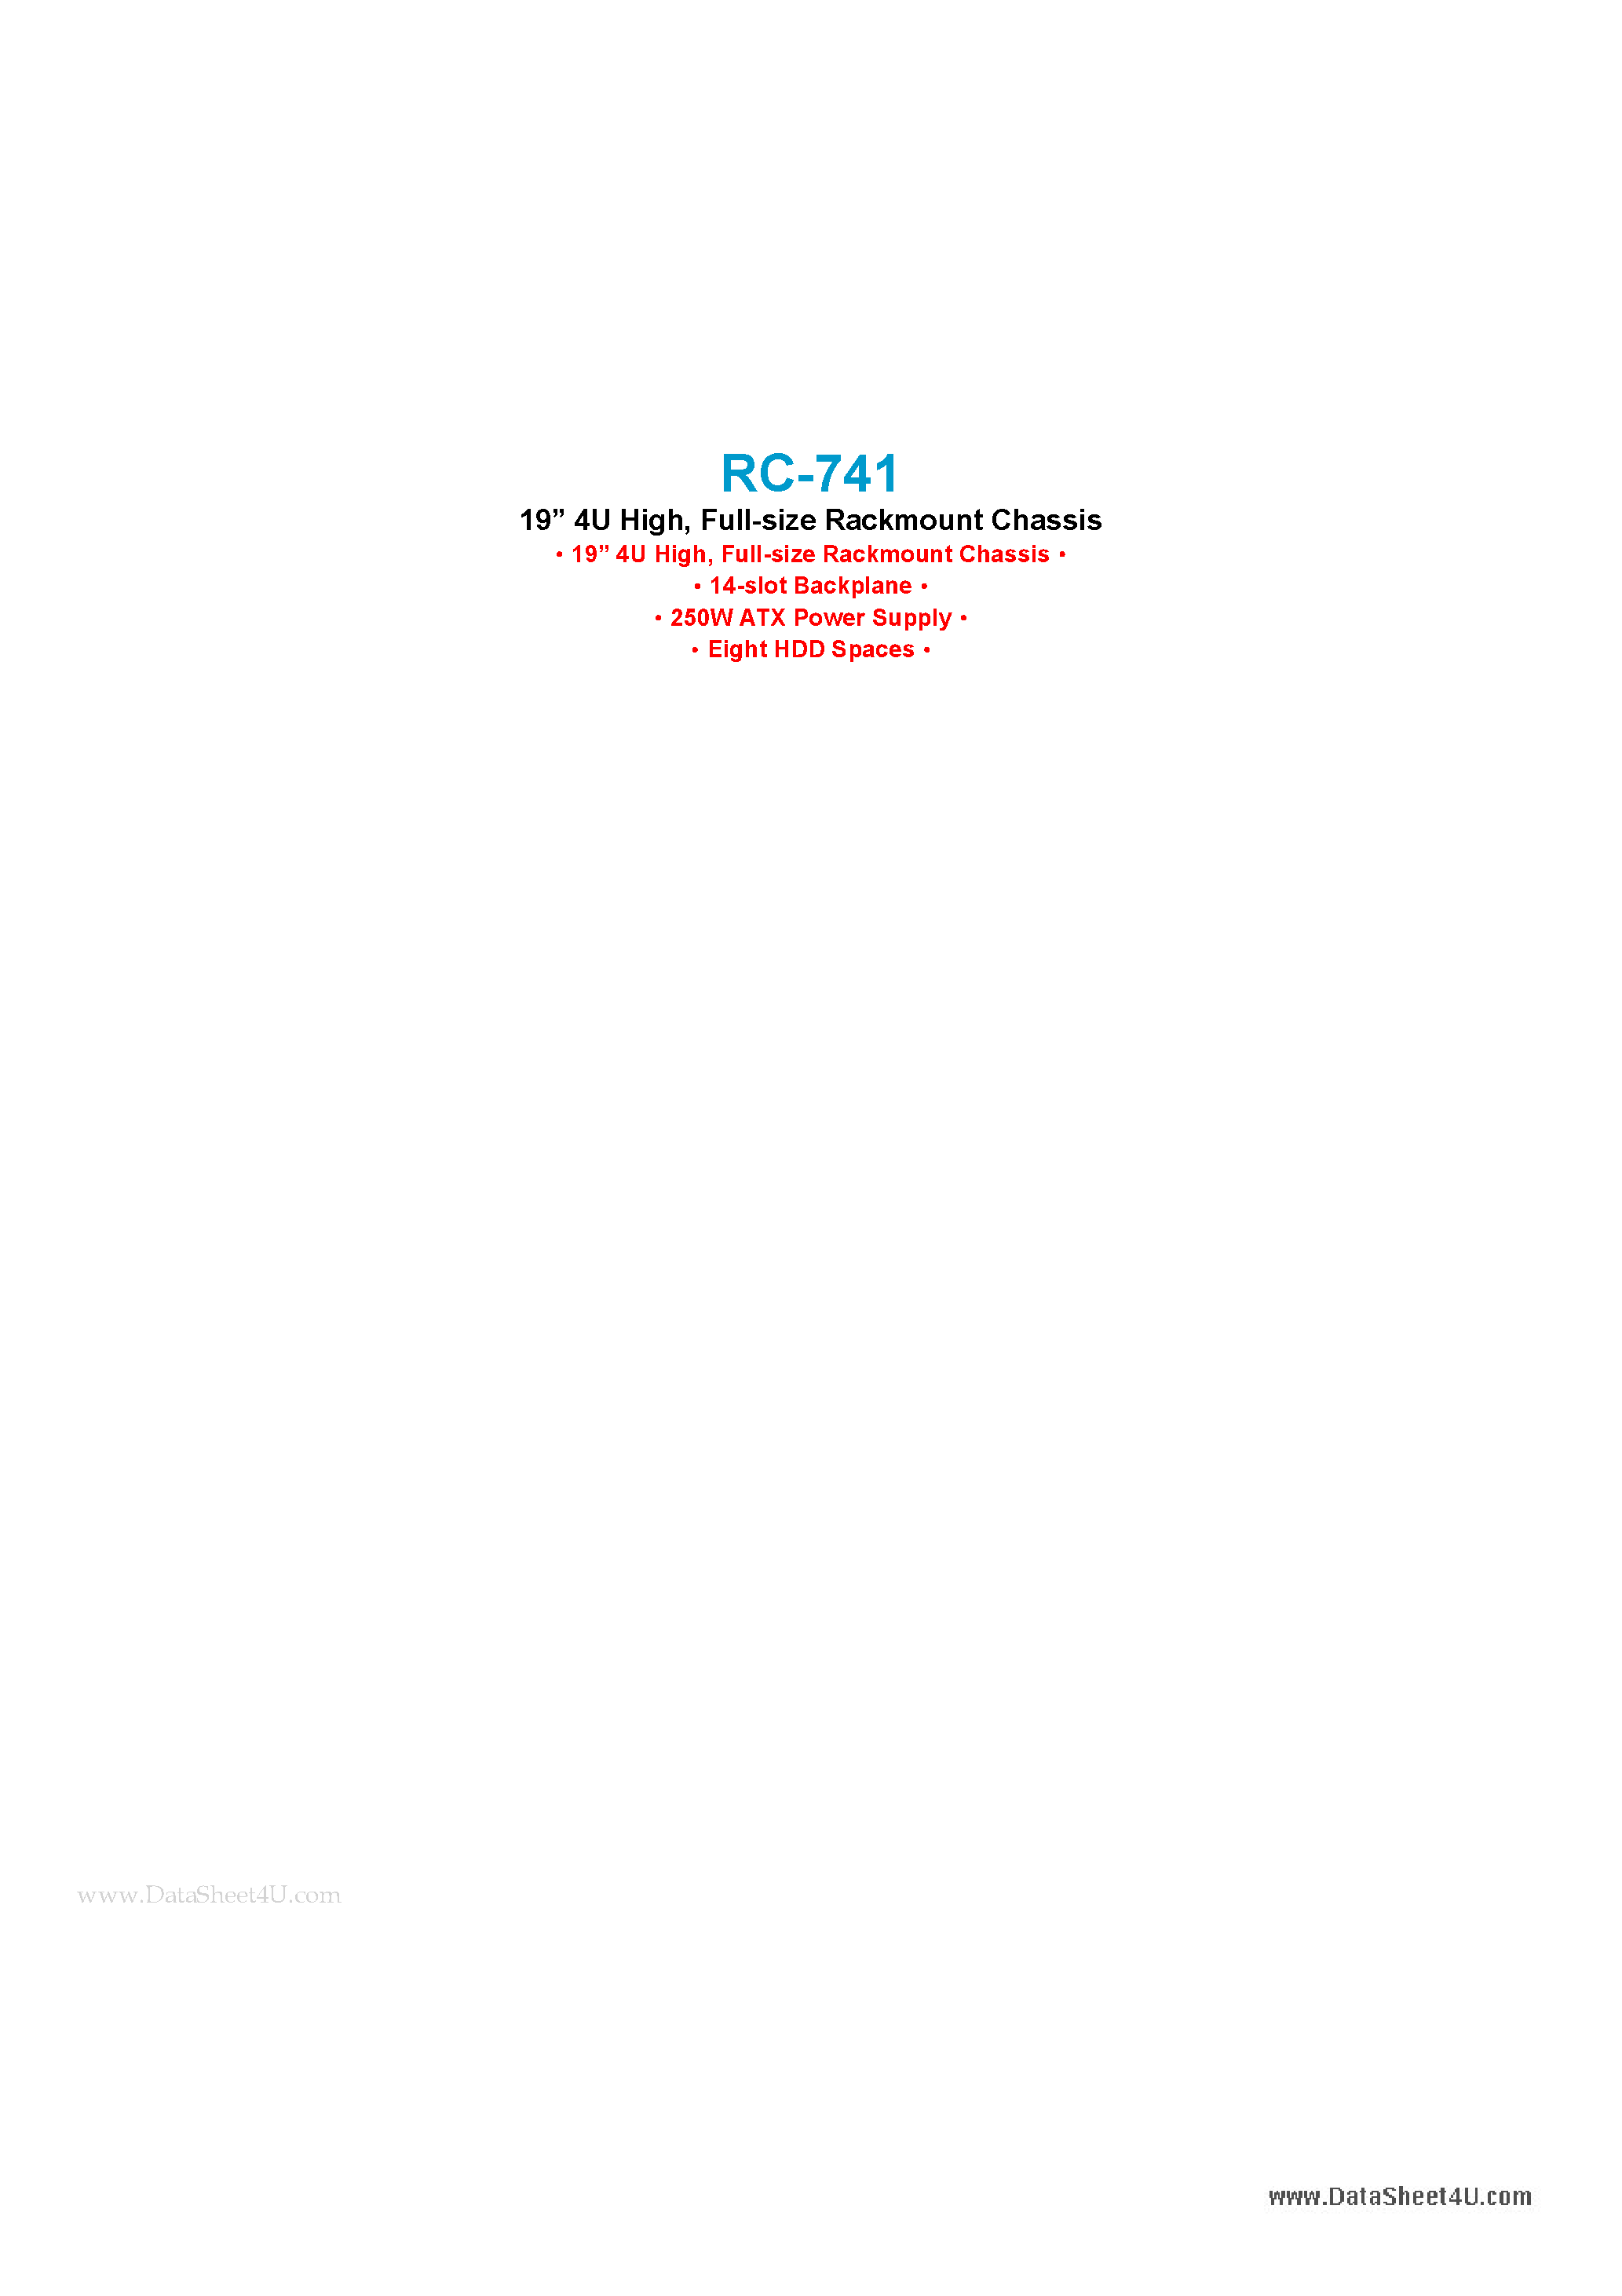 Даташит RC-741 - 19 4U High Full-size Rackmount Chassis страница 1